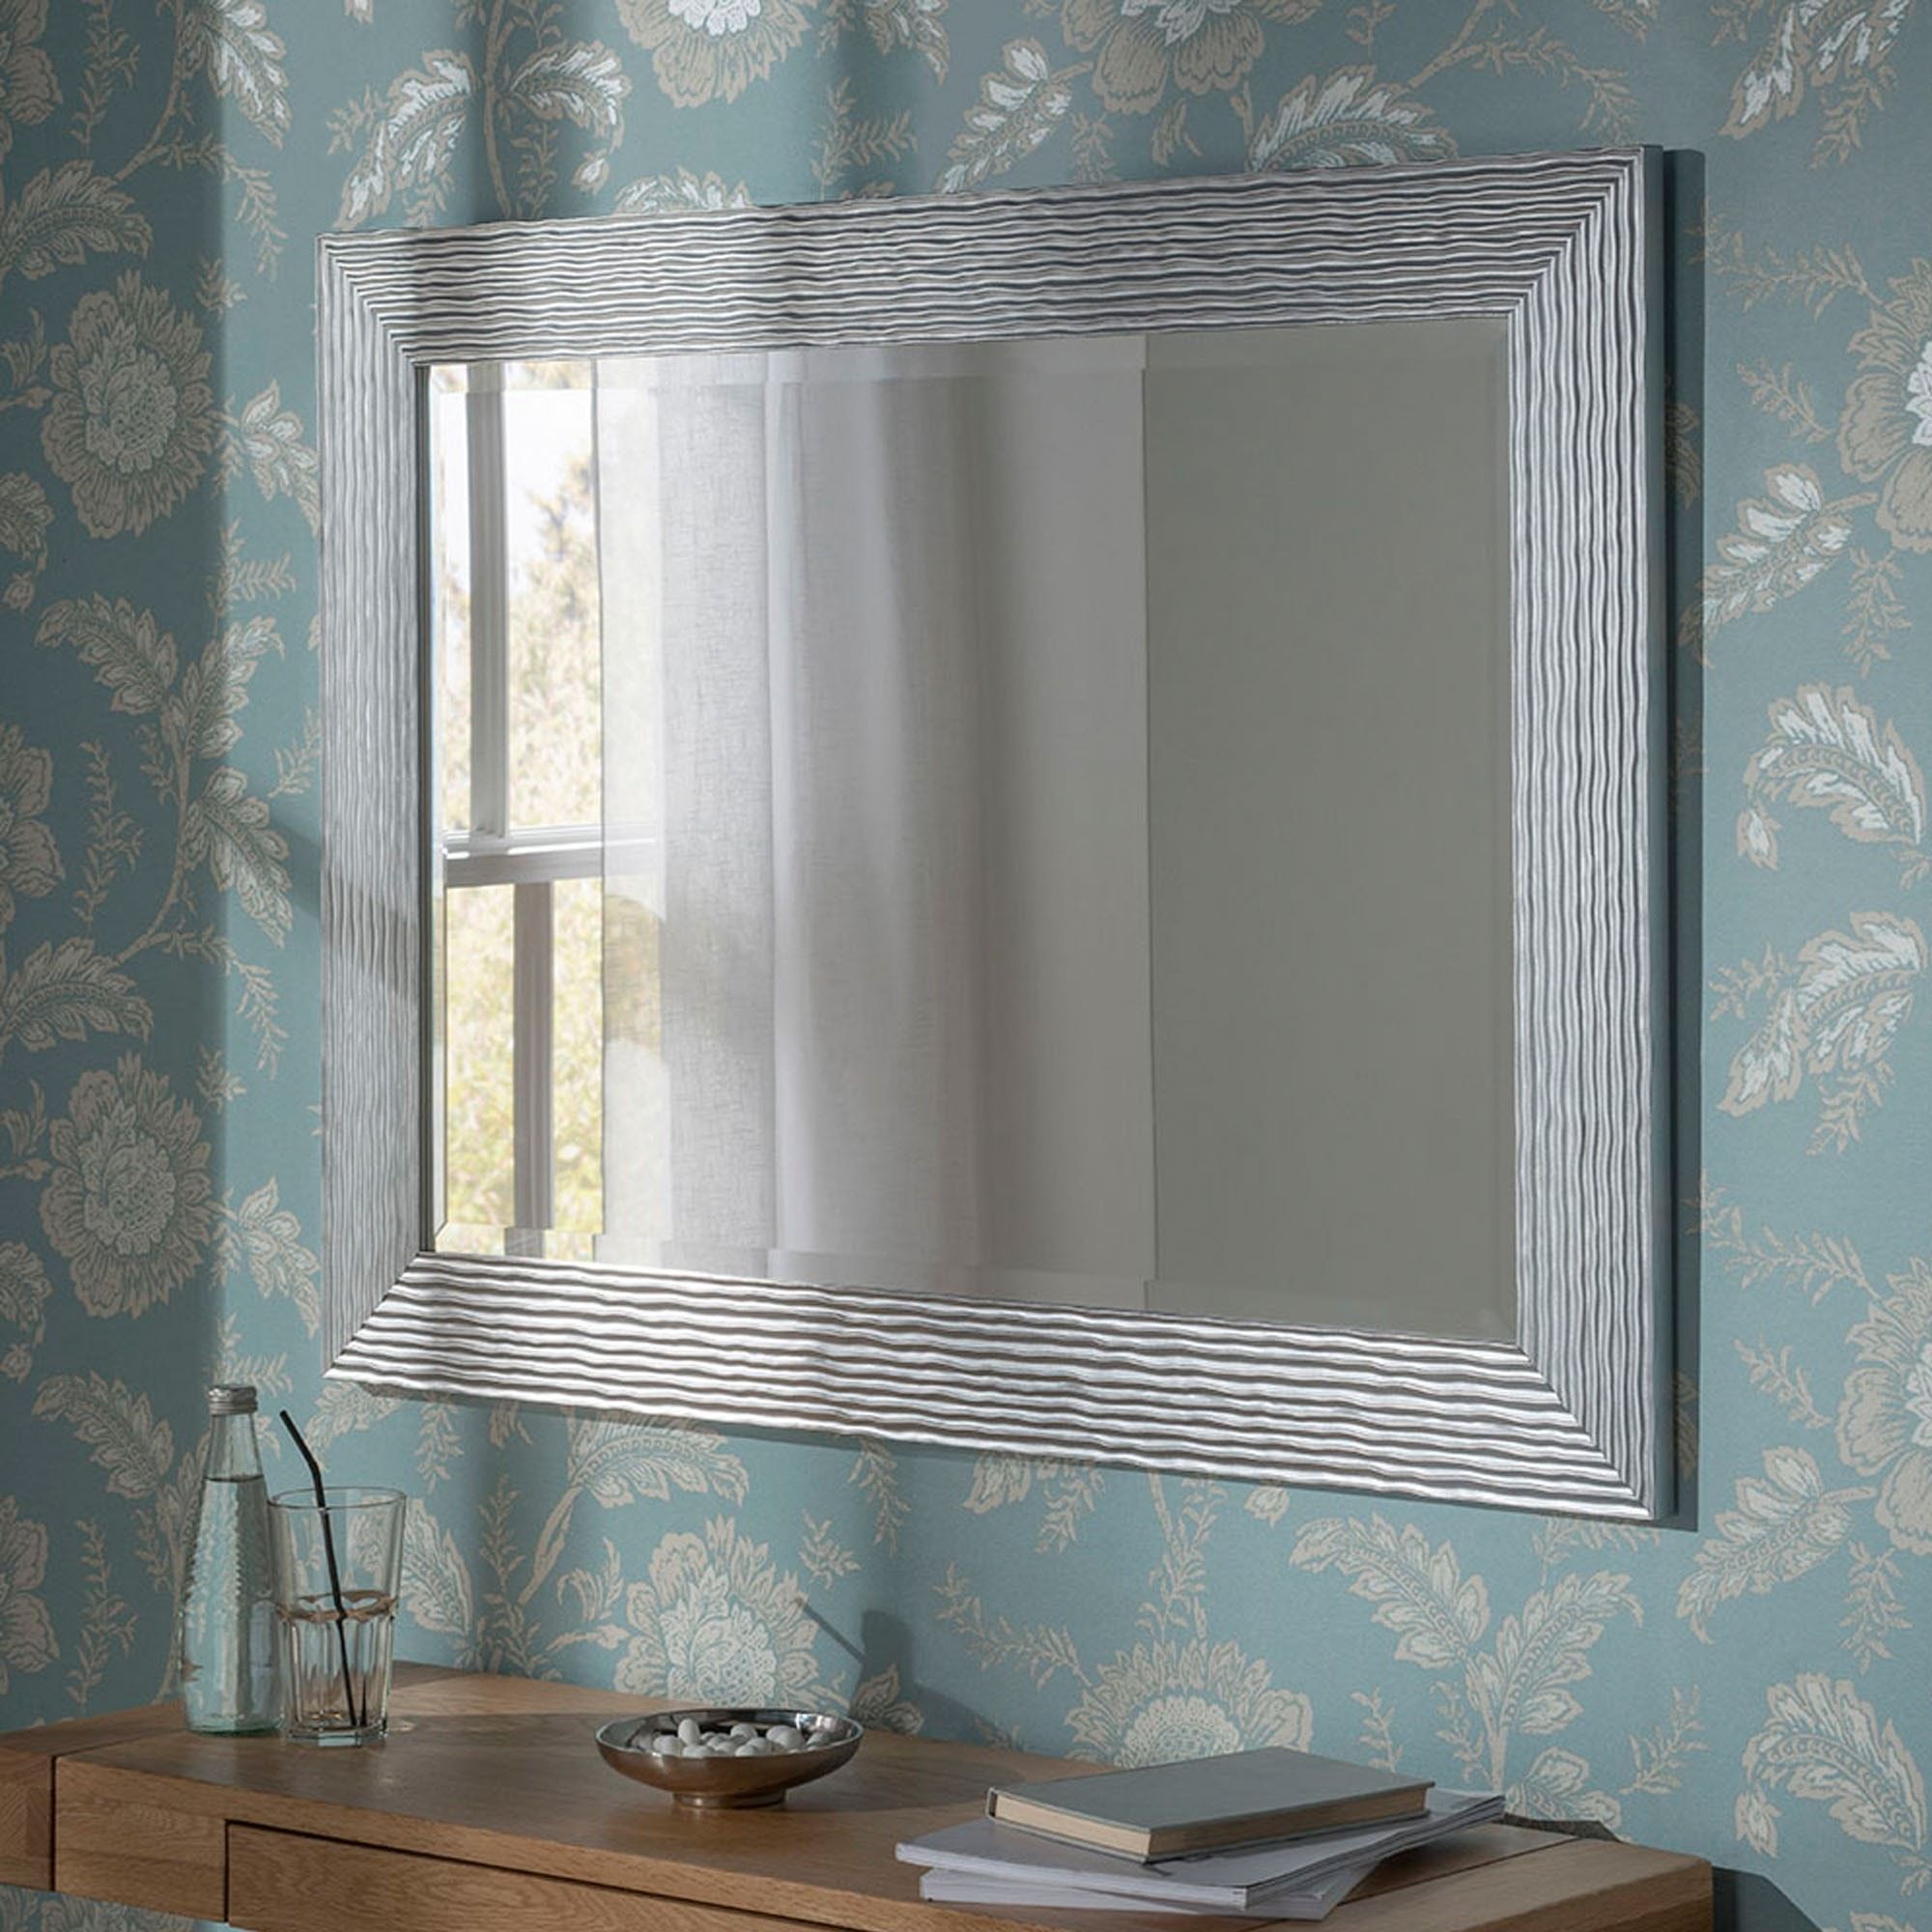 Rectangular Silver Decorative Mirror | Decorative Mirrors Throughout Silver Decorative Wall Mirrors (View 13 of 15)